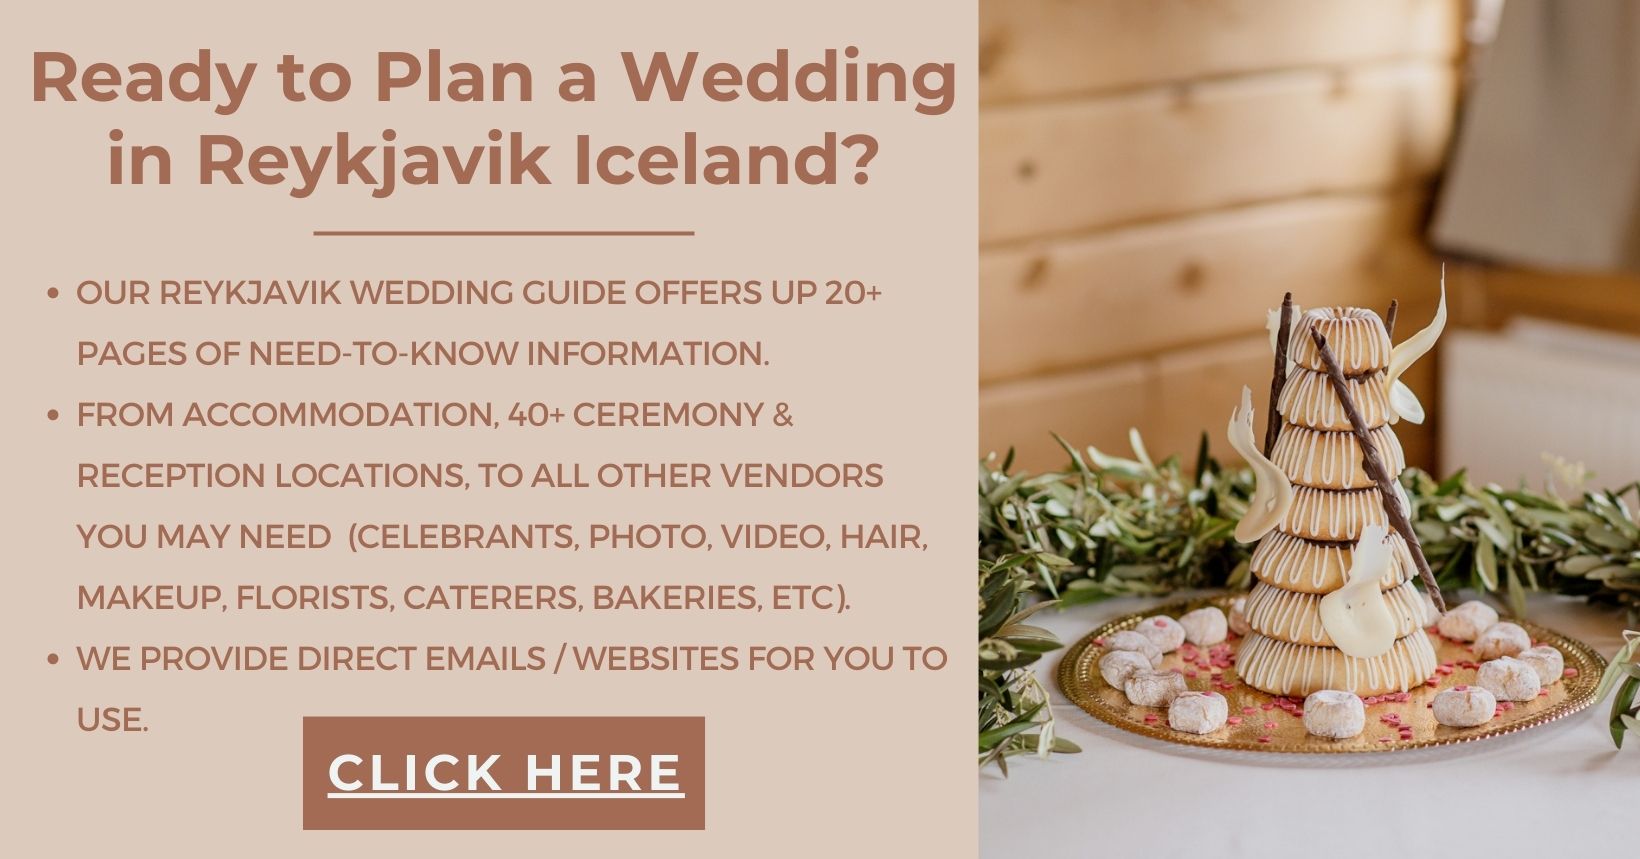 DIY Reykjavik Wedding Guide